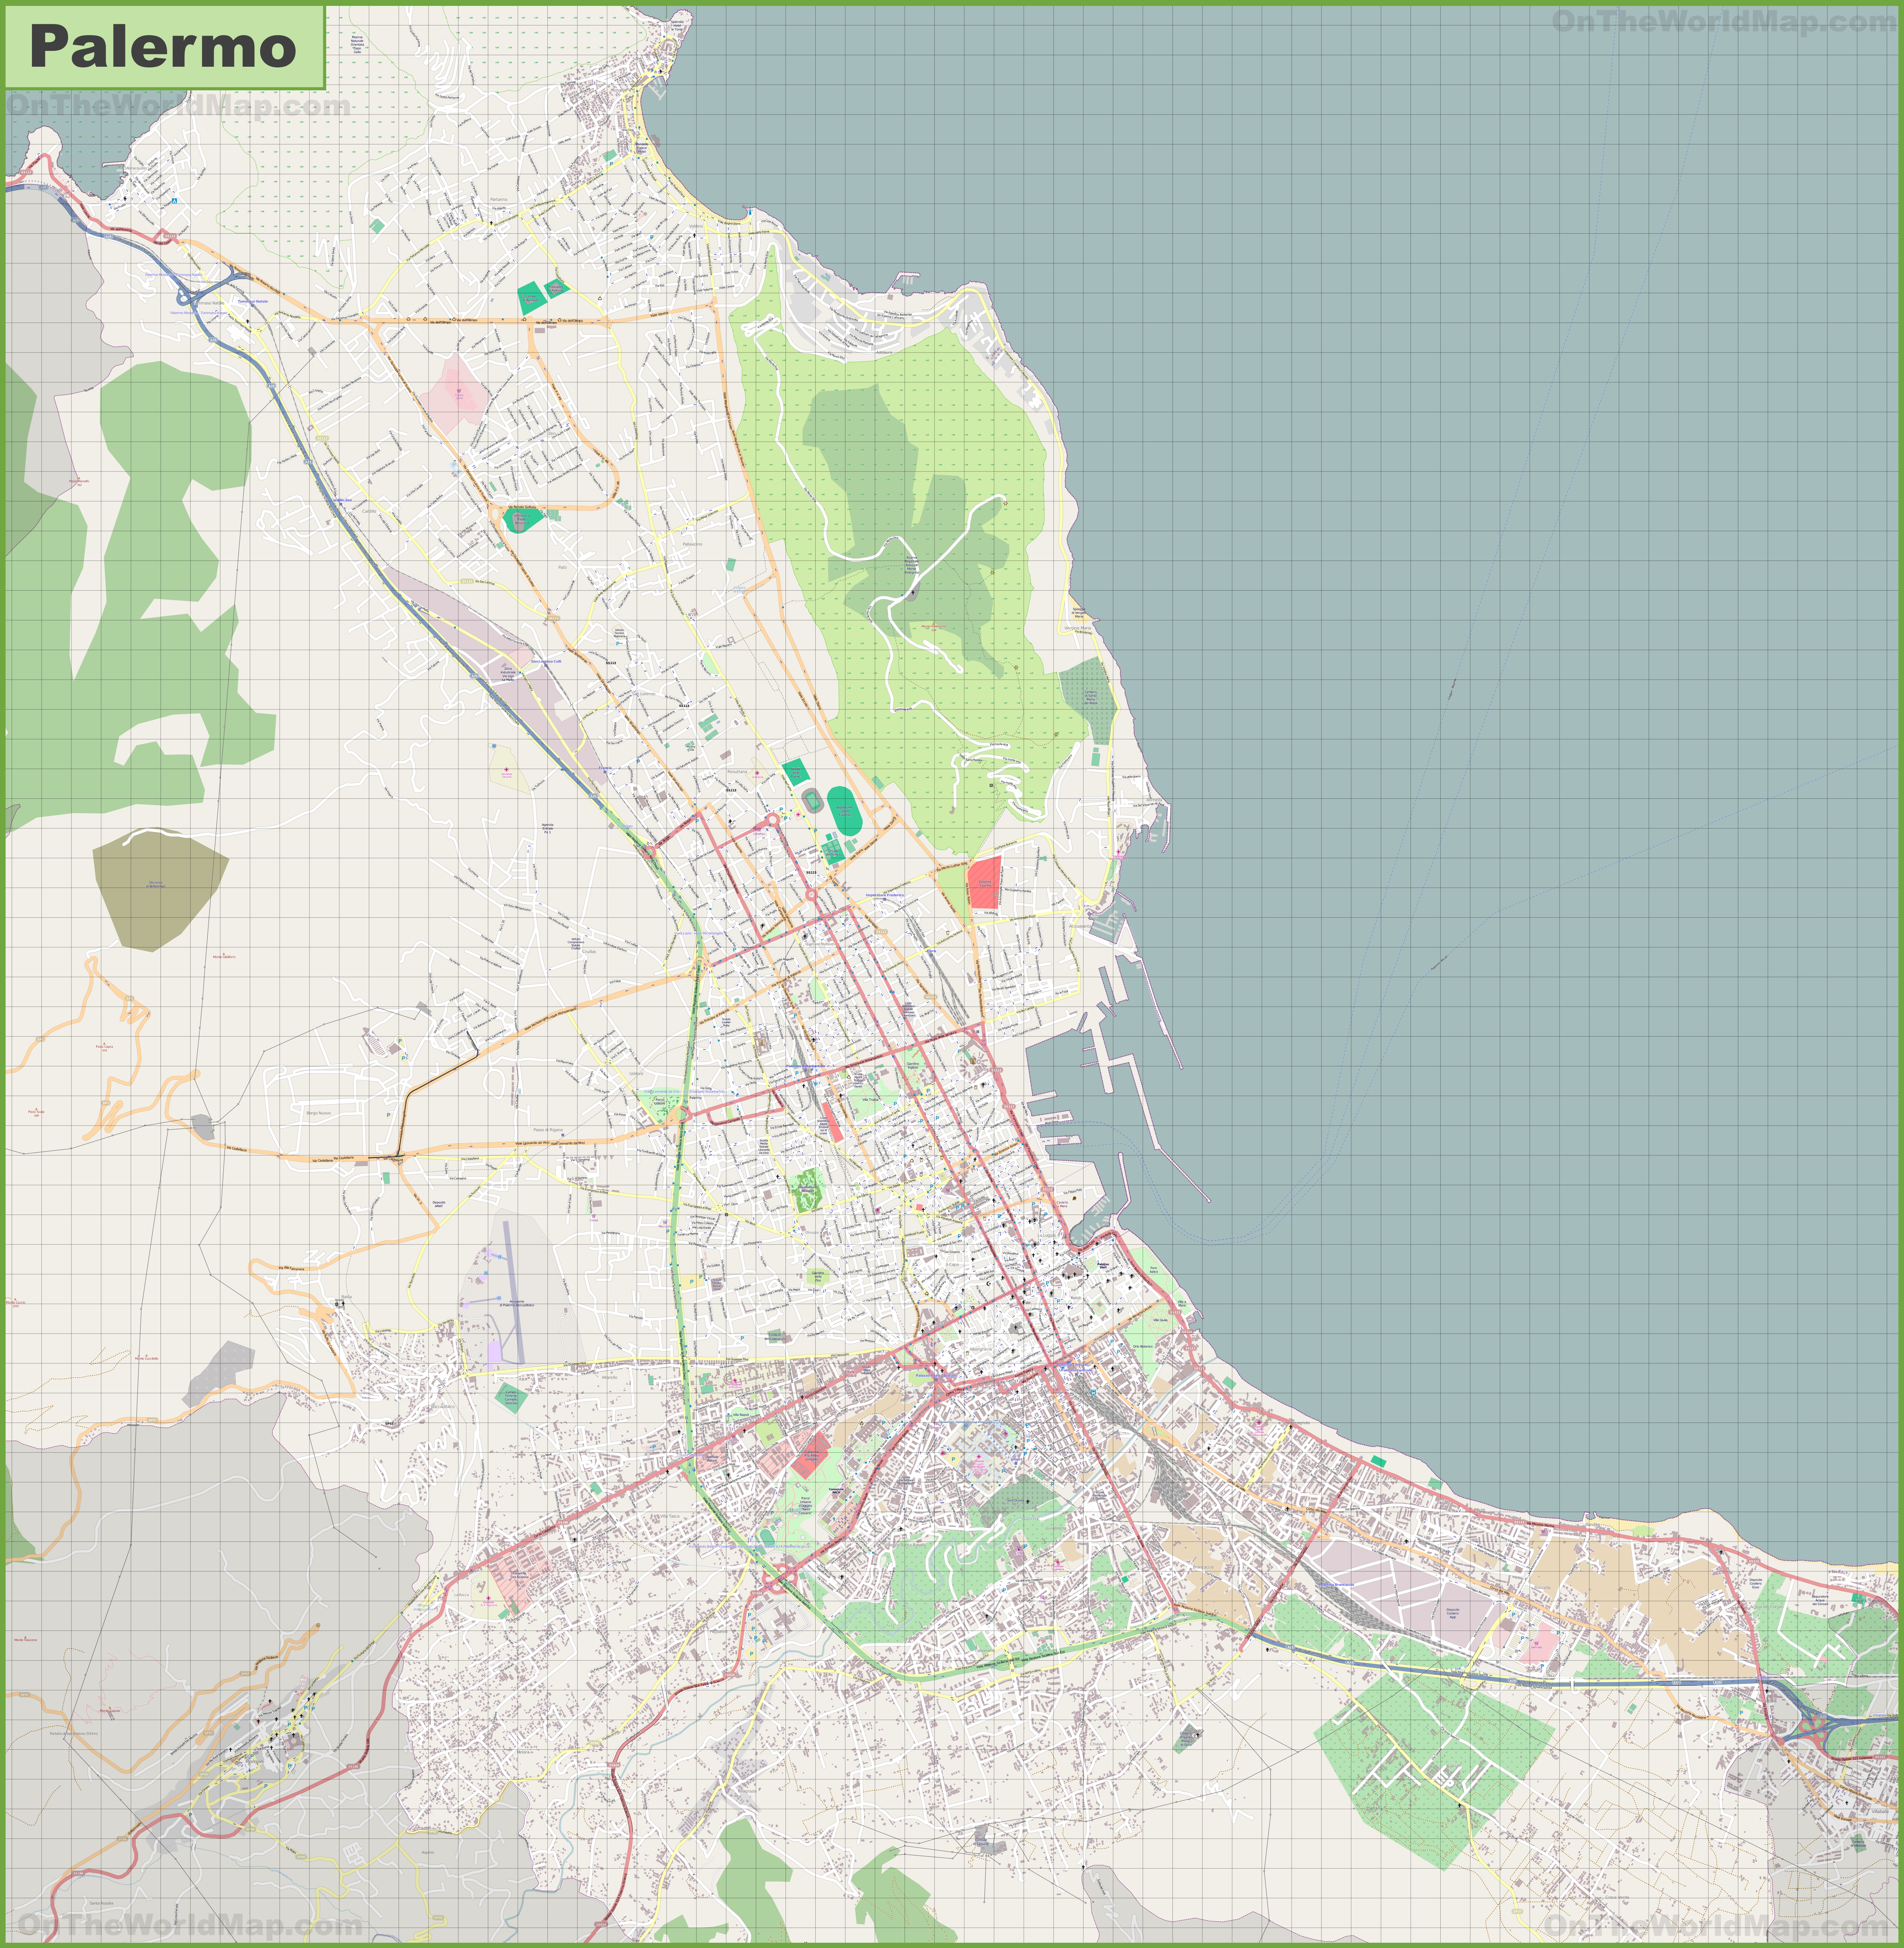 large-detailed-map-of-palermo.jpg